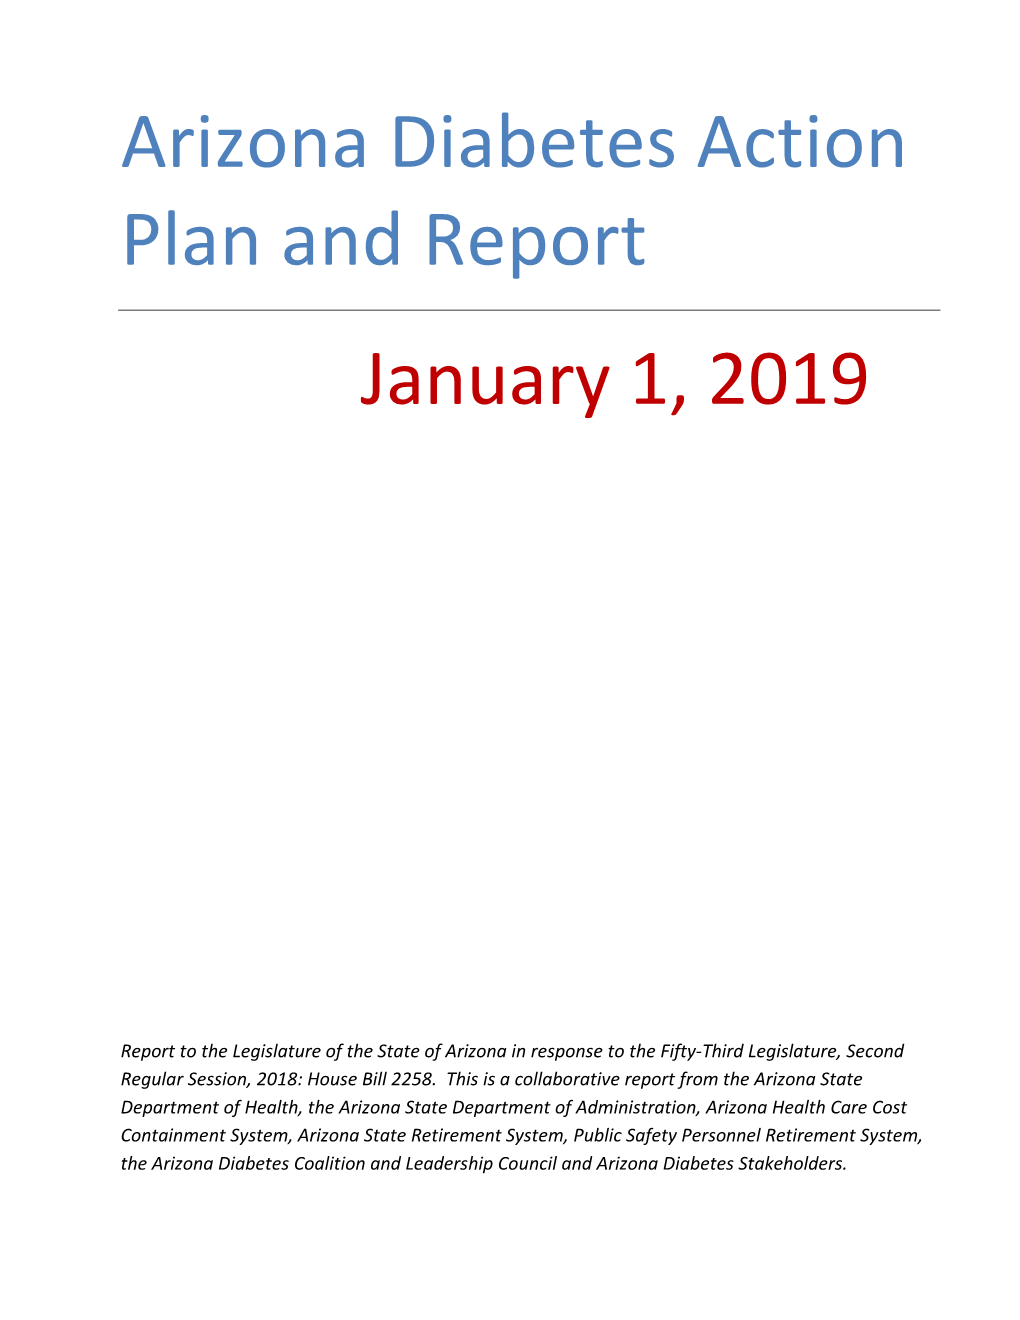 Arizona Diabetes Action Plan and Report January 1, 2019